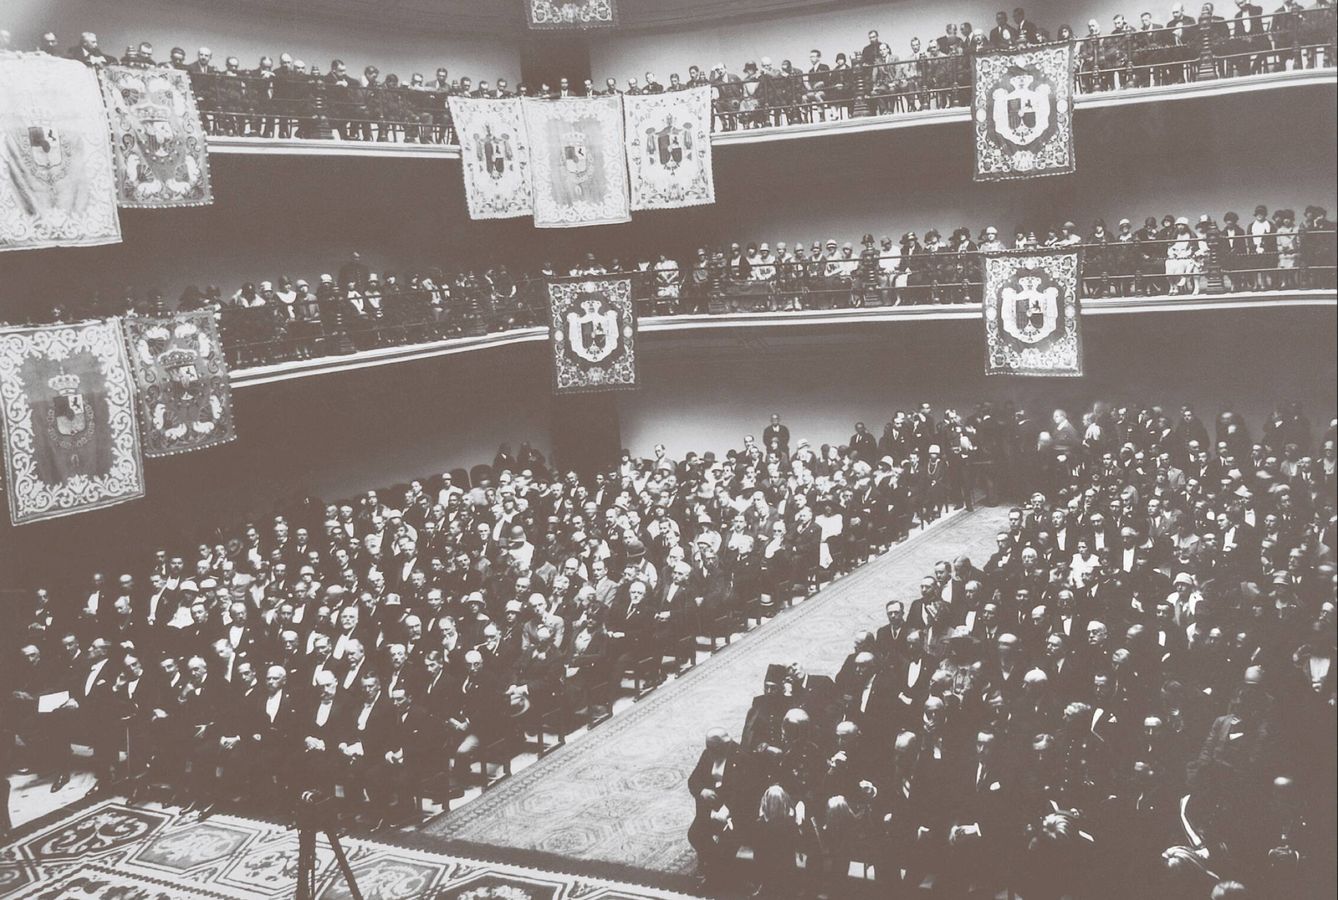 XIV Congreso Geológico Internacional, 1926